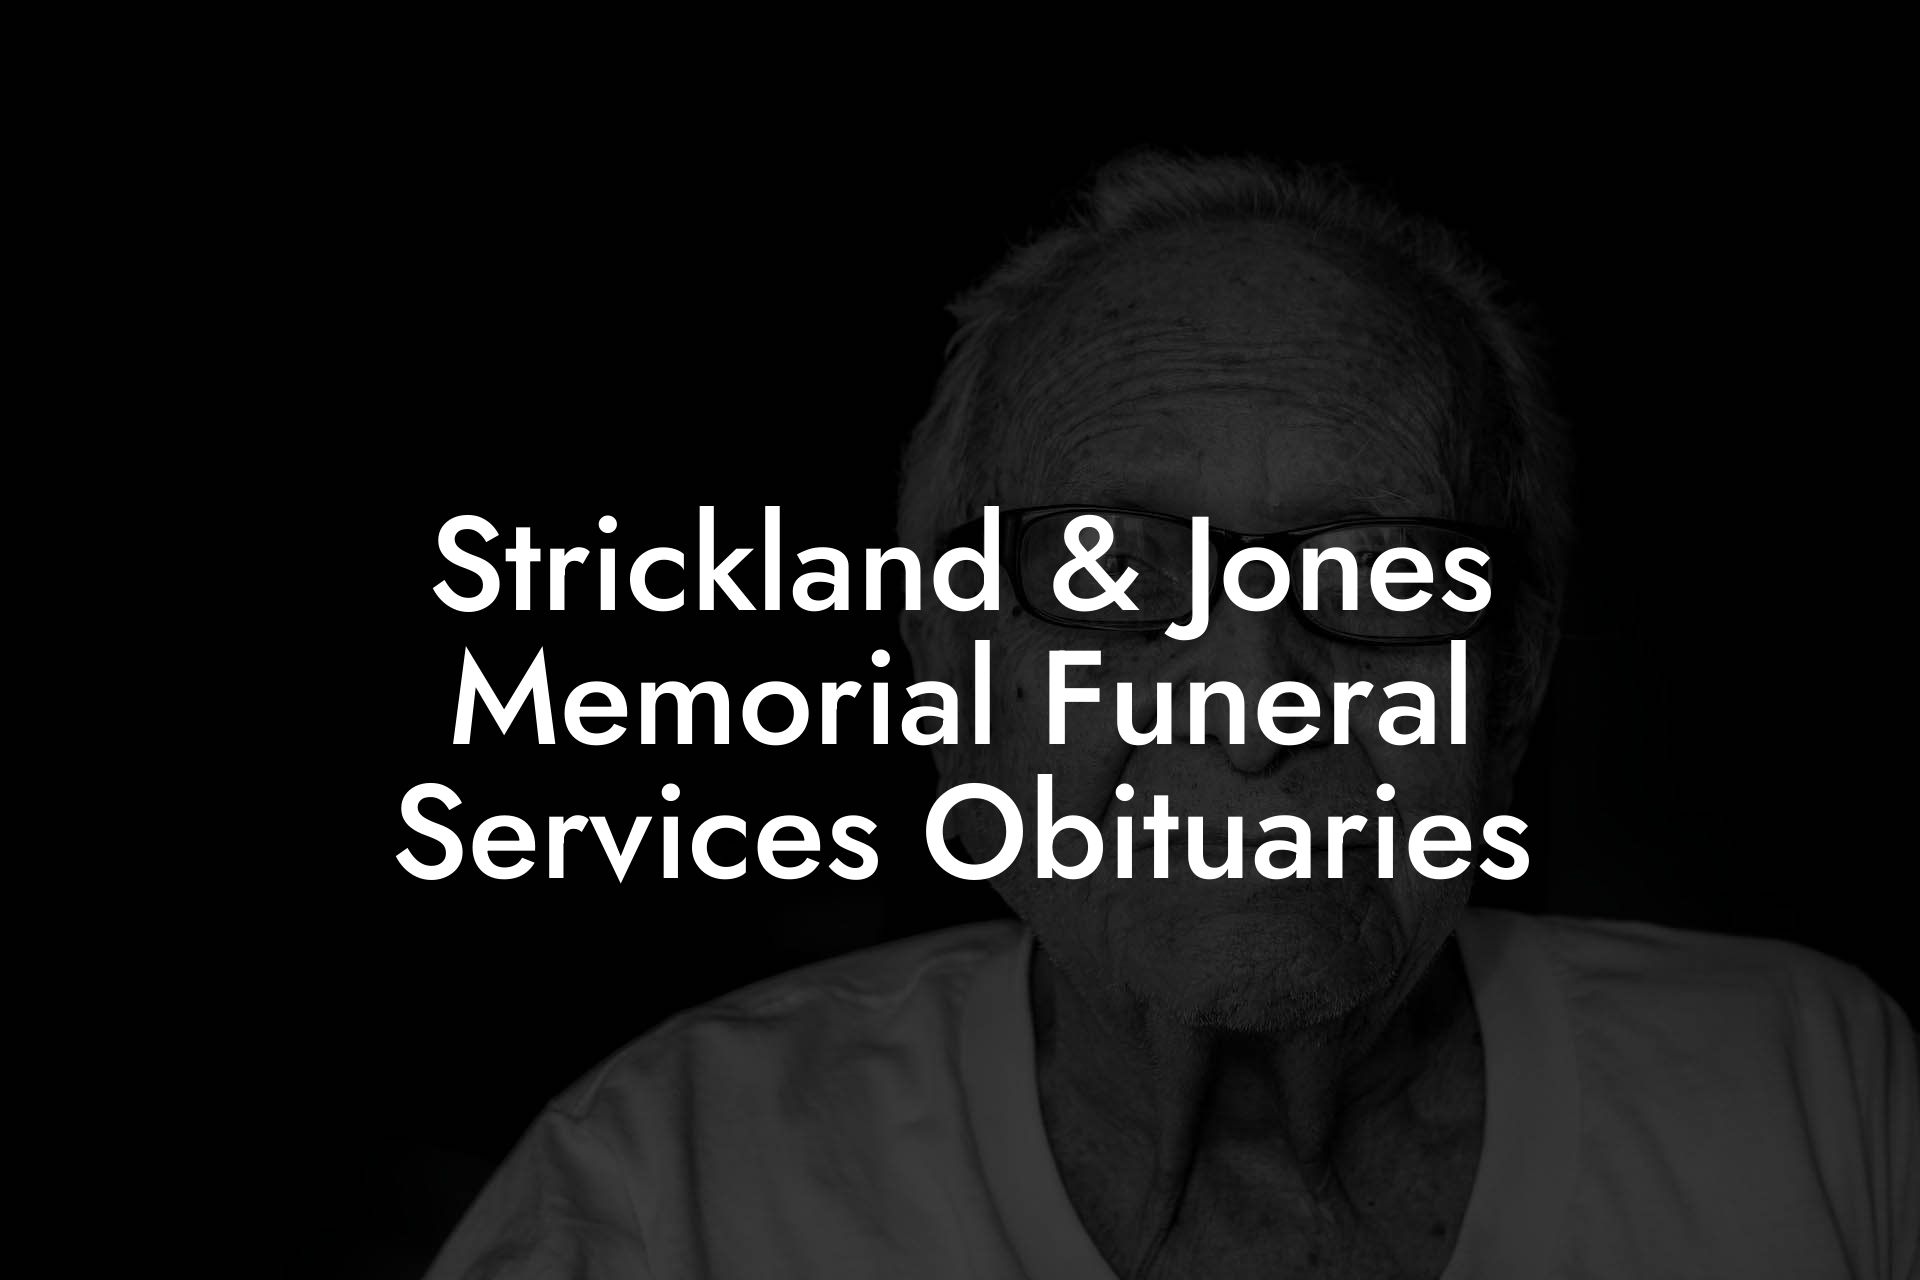 Strickland & Jones Memorial Funeral Services Obituaries